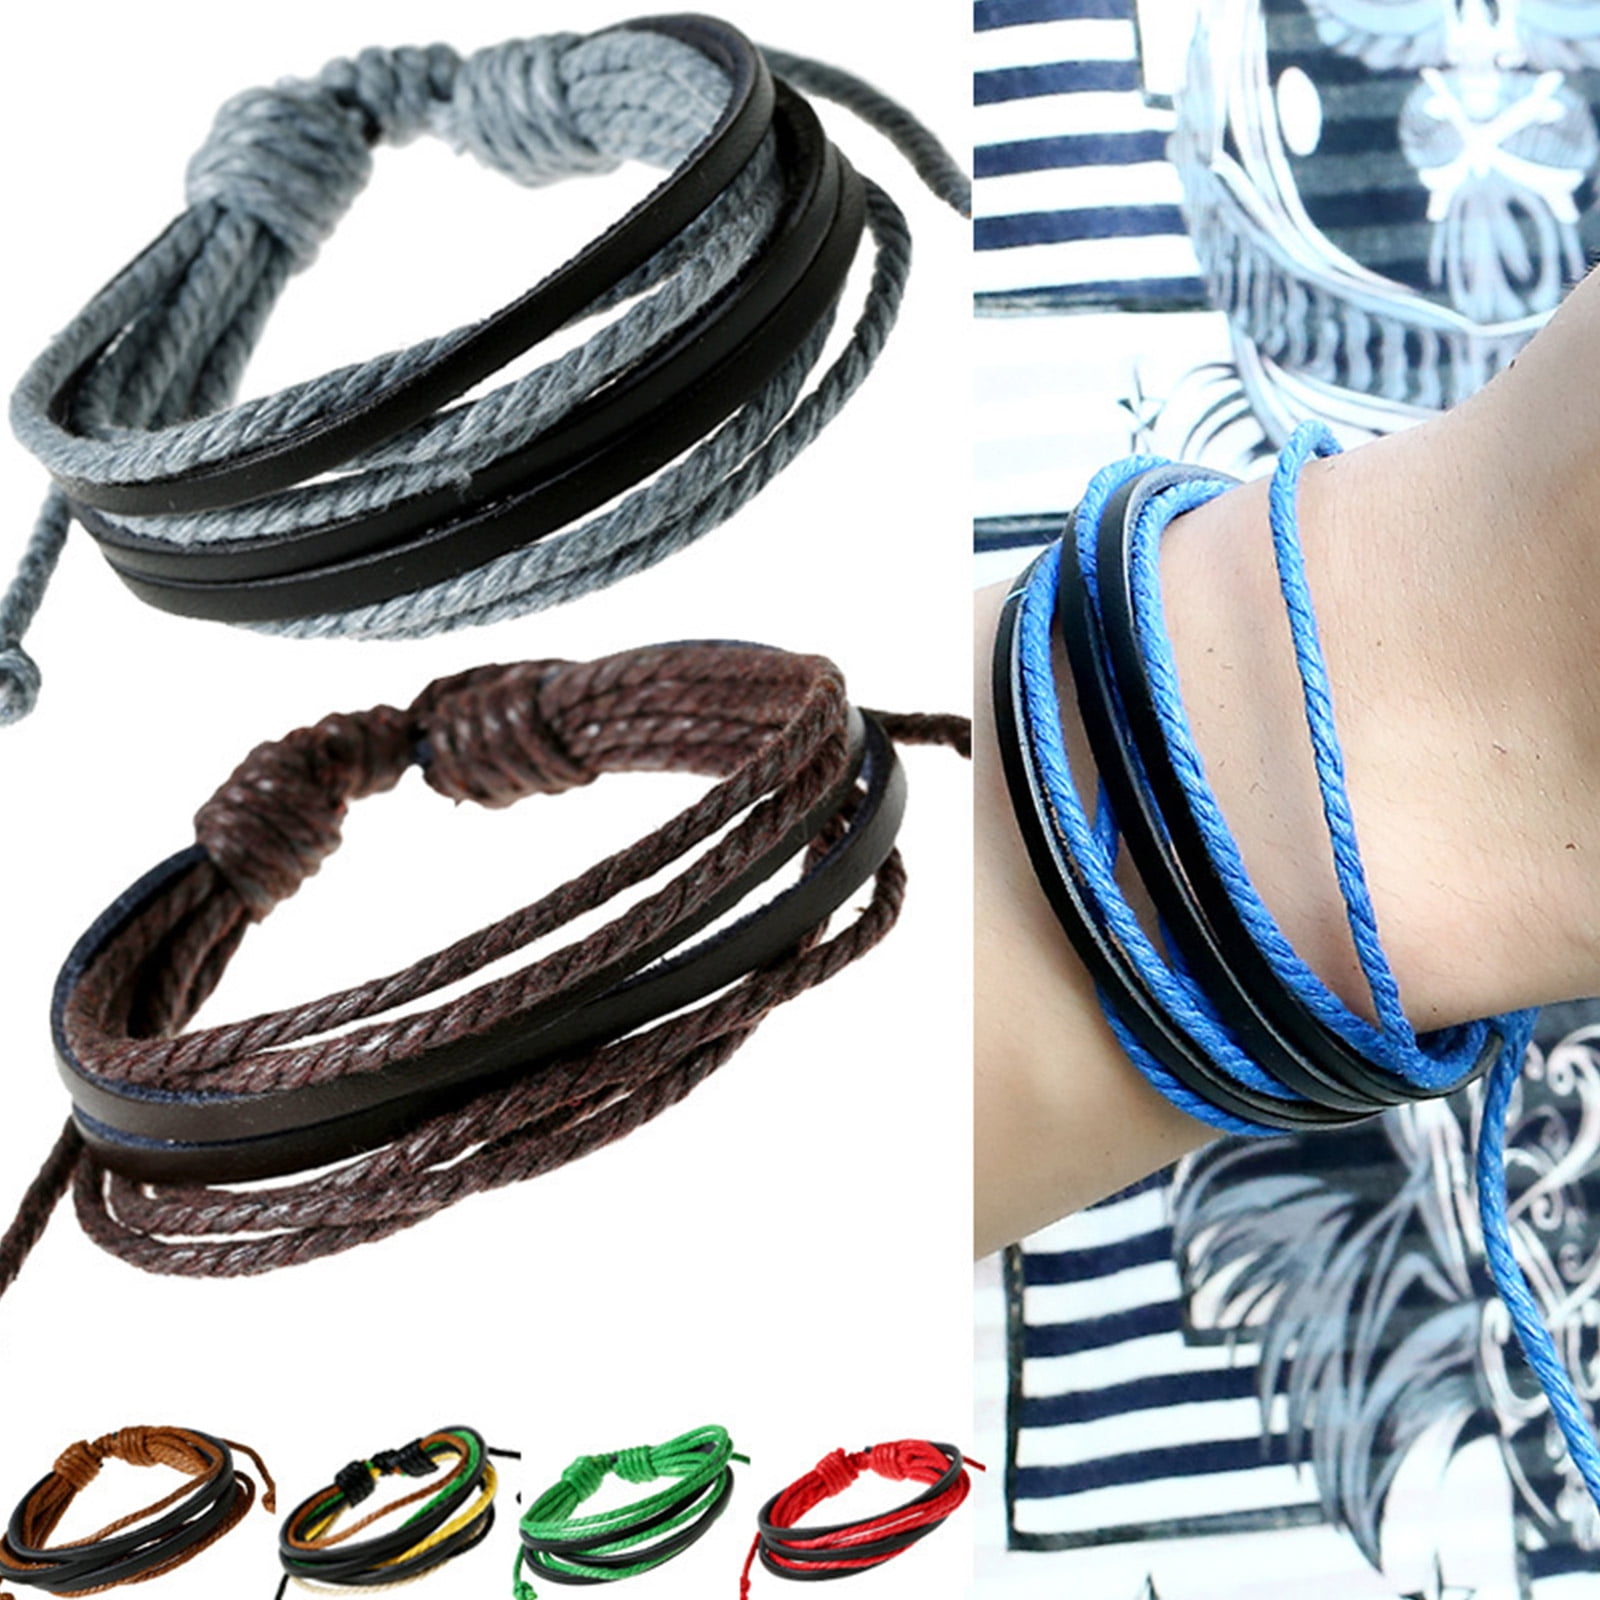 【 NS Hemp 】 100% Hemp Cord for Jewelry Making, Bracelets, Necklaces, Arts Crafts Gift - 1mm, 130M (Rasta)